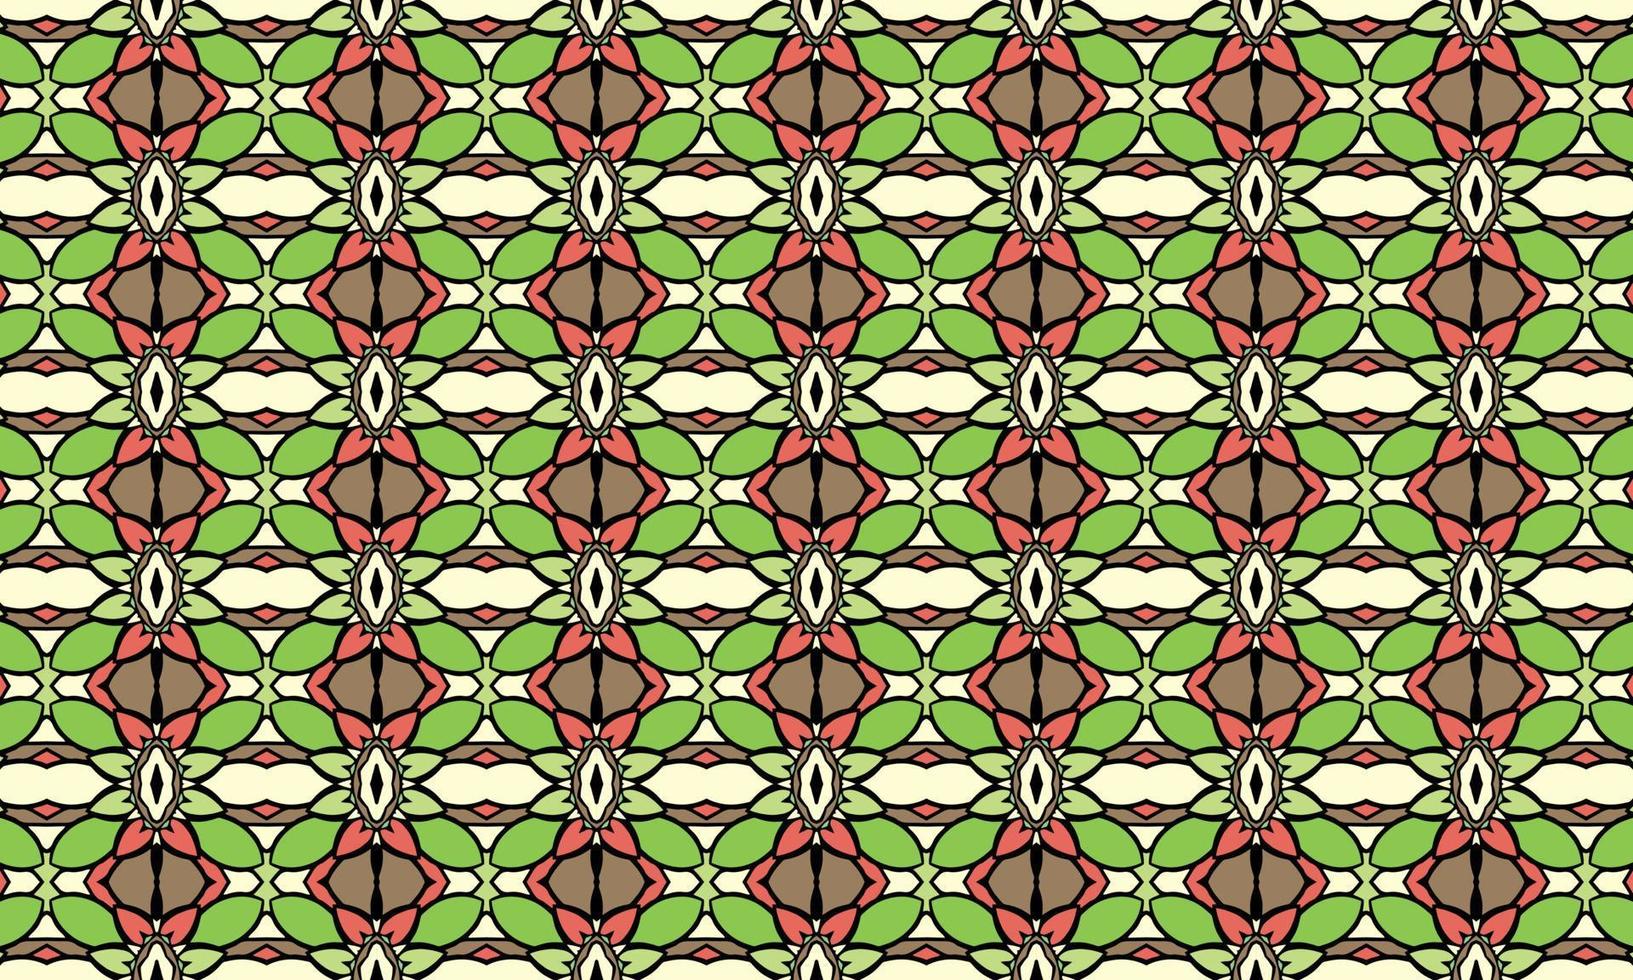 Seamless repeated pattern design. Women's long dress pattern design, vector vintage art illustration